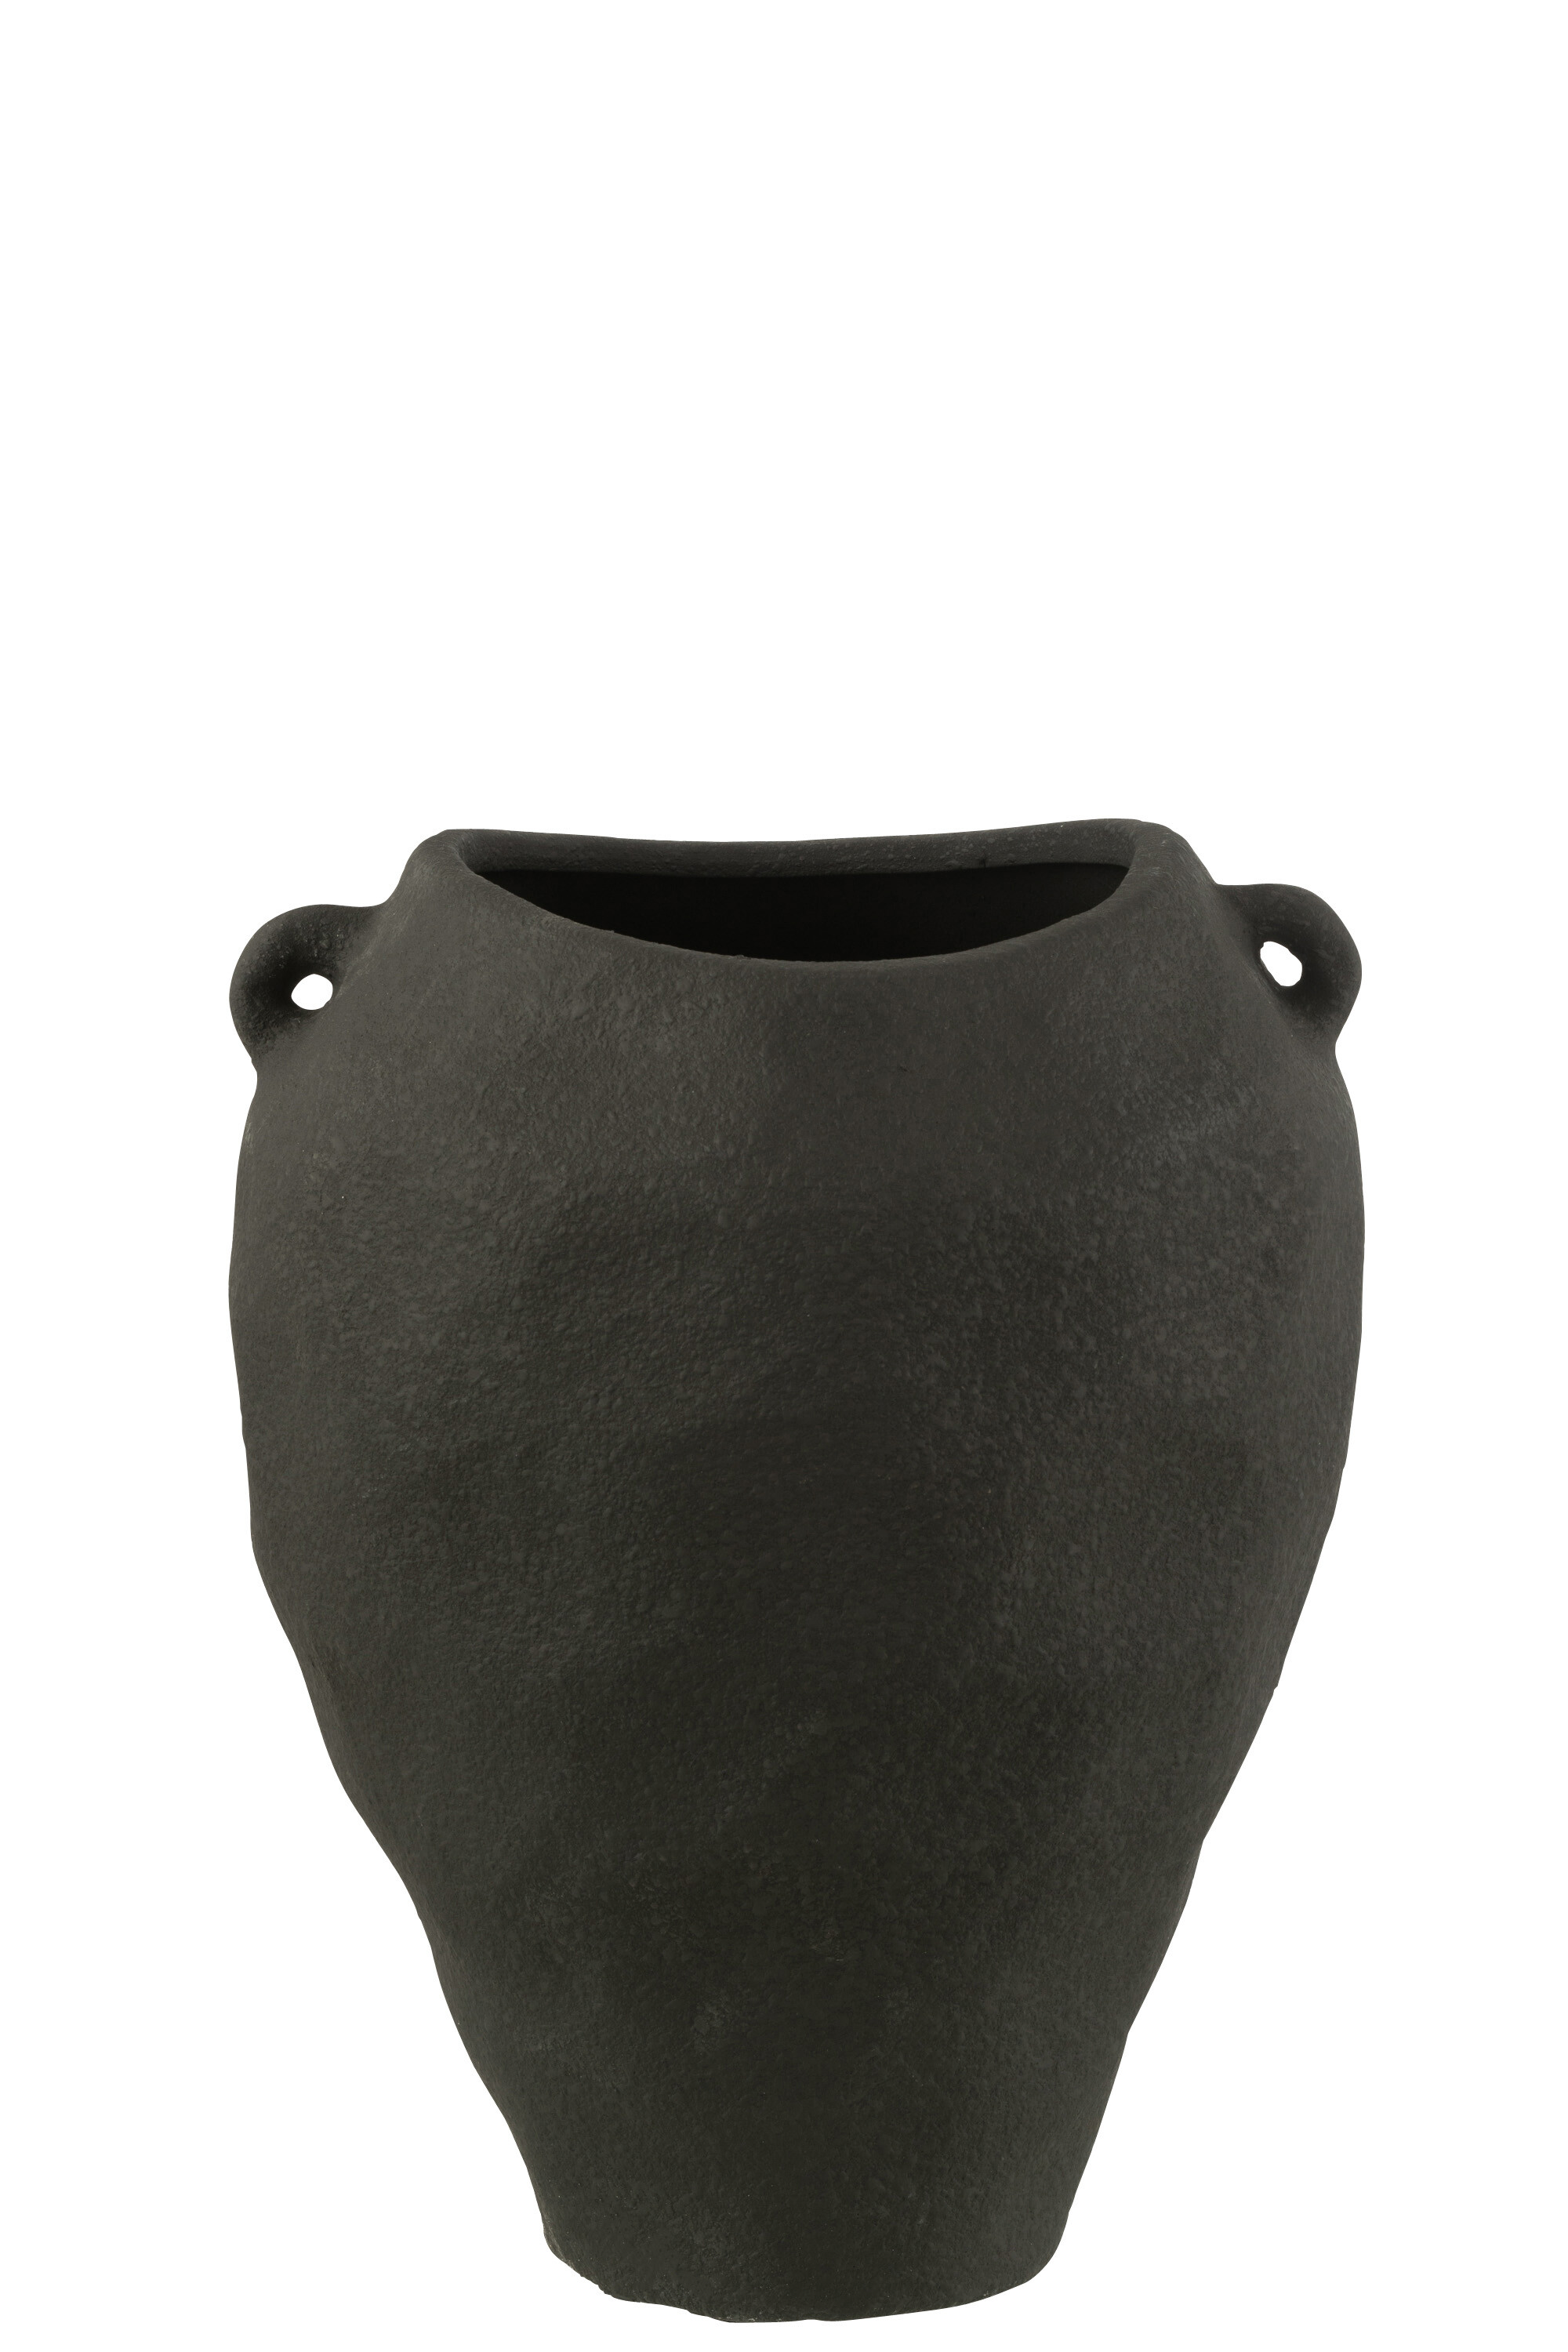 Vaza Lara, argila neagra